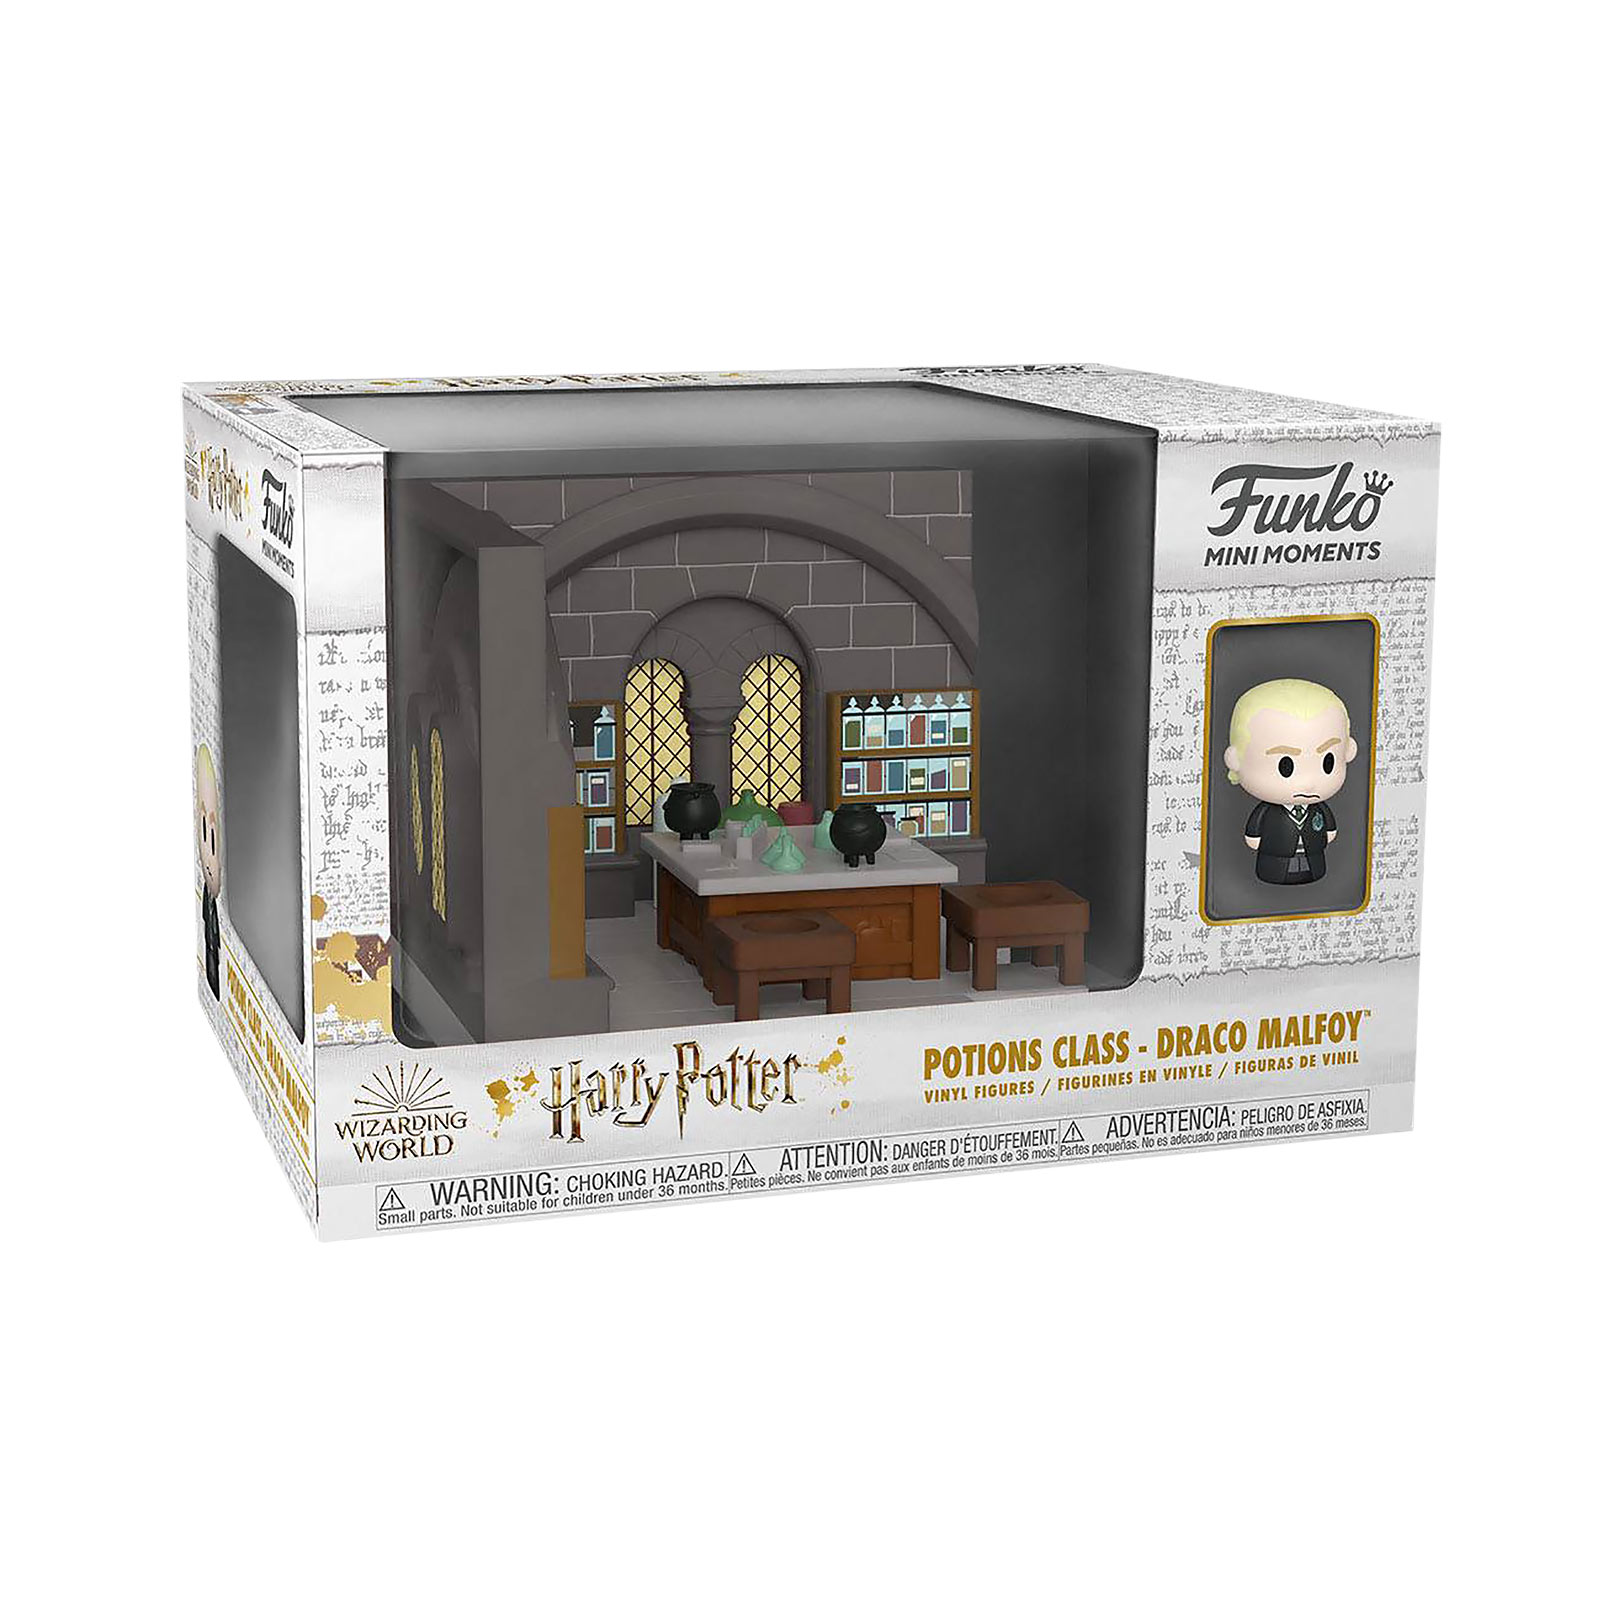 Draco Malfoy Potion Class Funko Pop Mini Moments Figure - Harry Potter